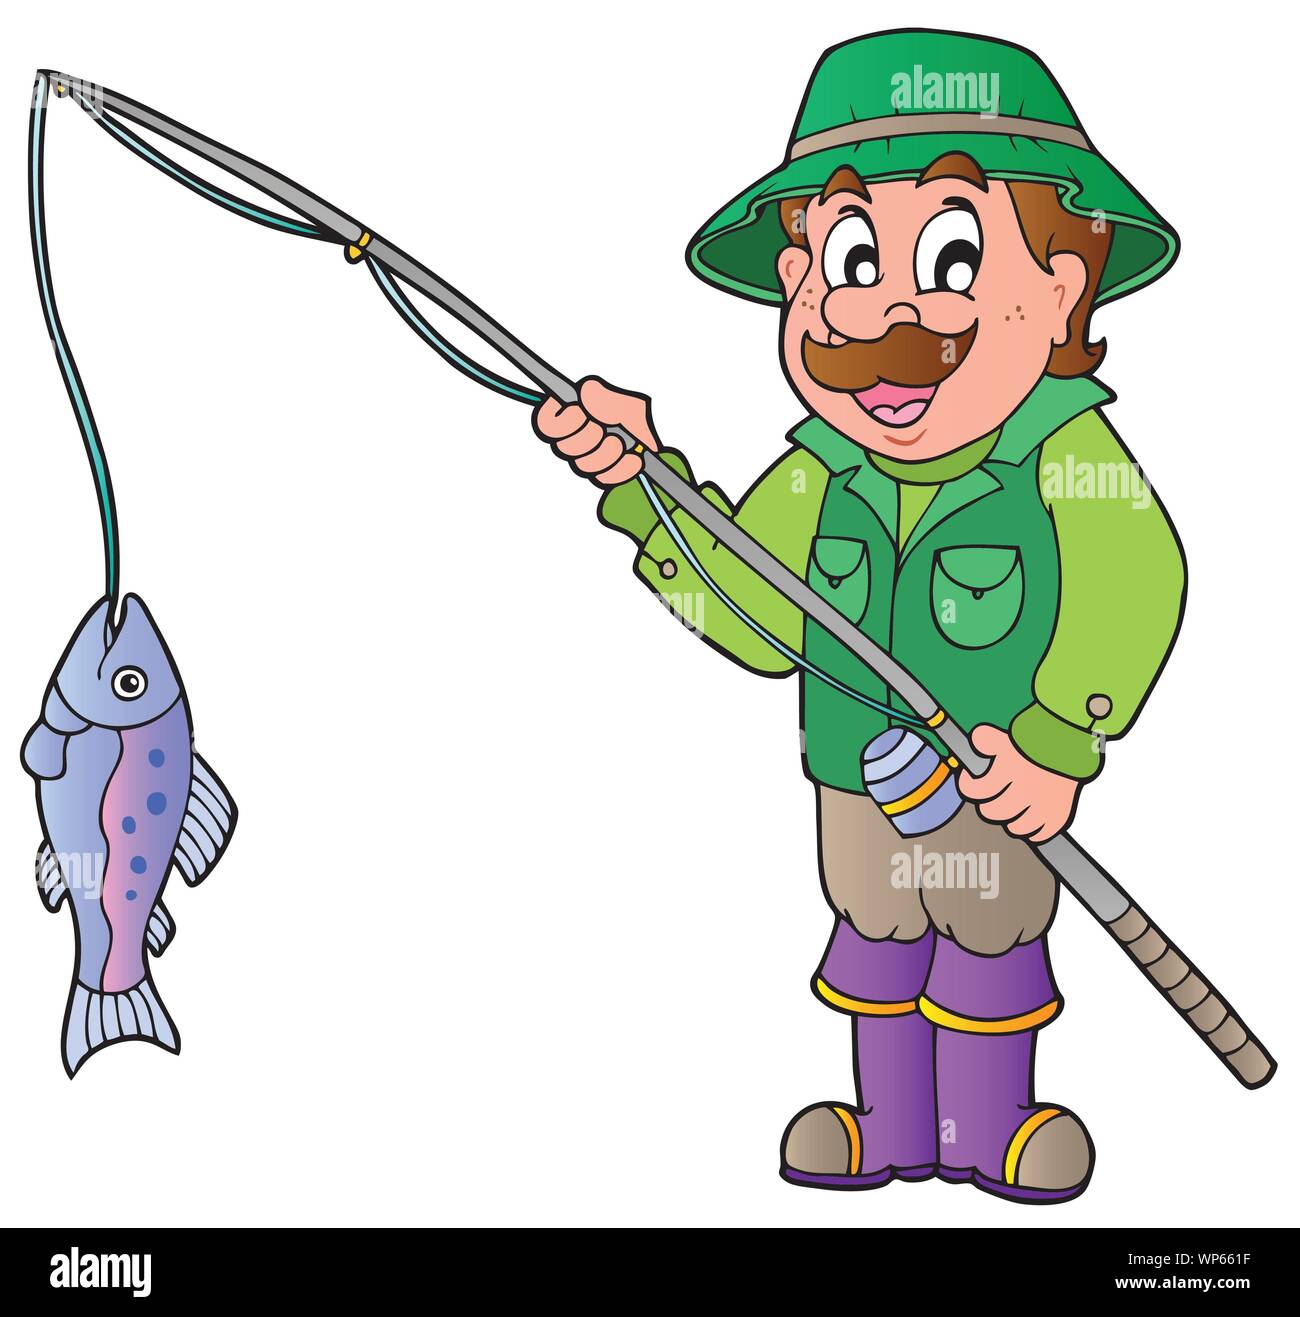 Carrete de pescador Imágenes recortadas de stock - Página 3 - Alamy